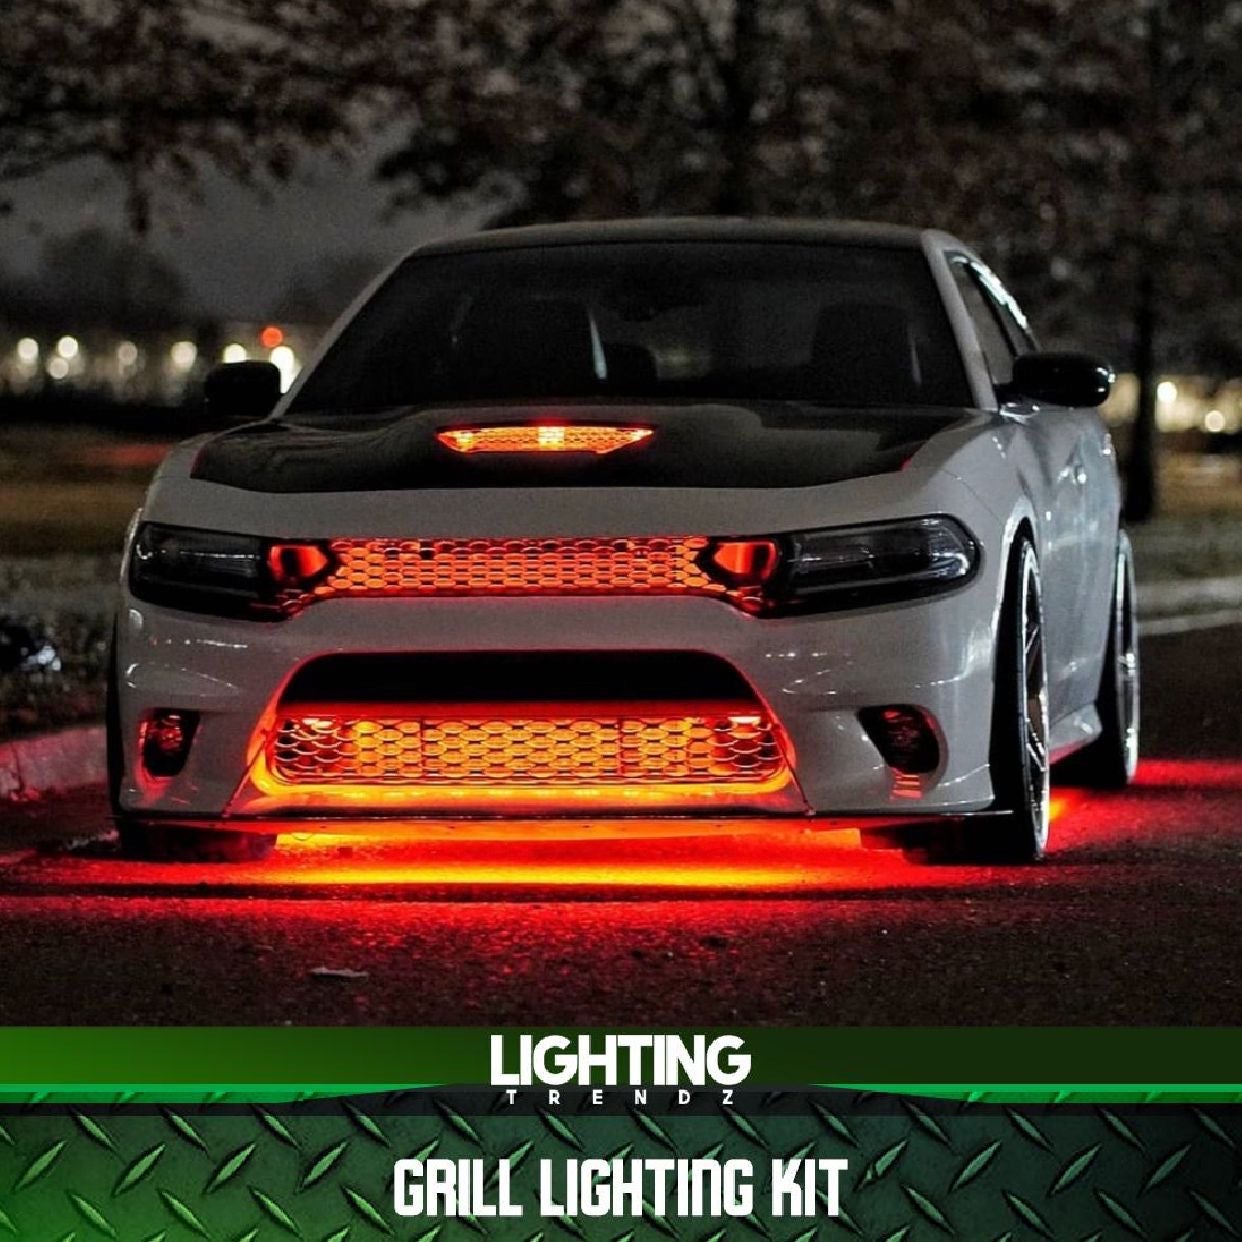 Lighting Trendz Grill Lighting Kit